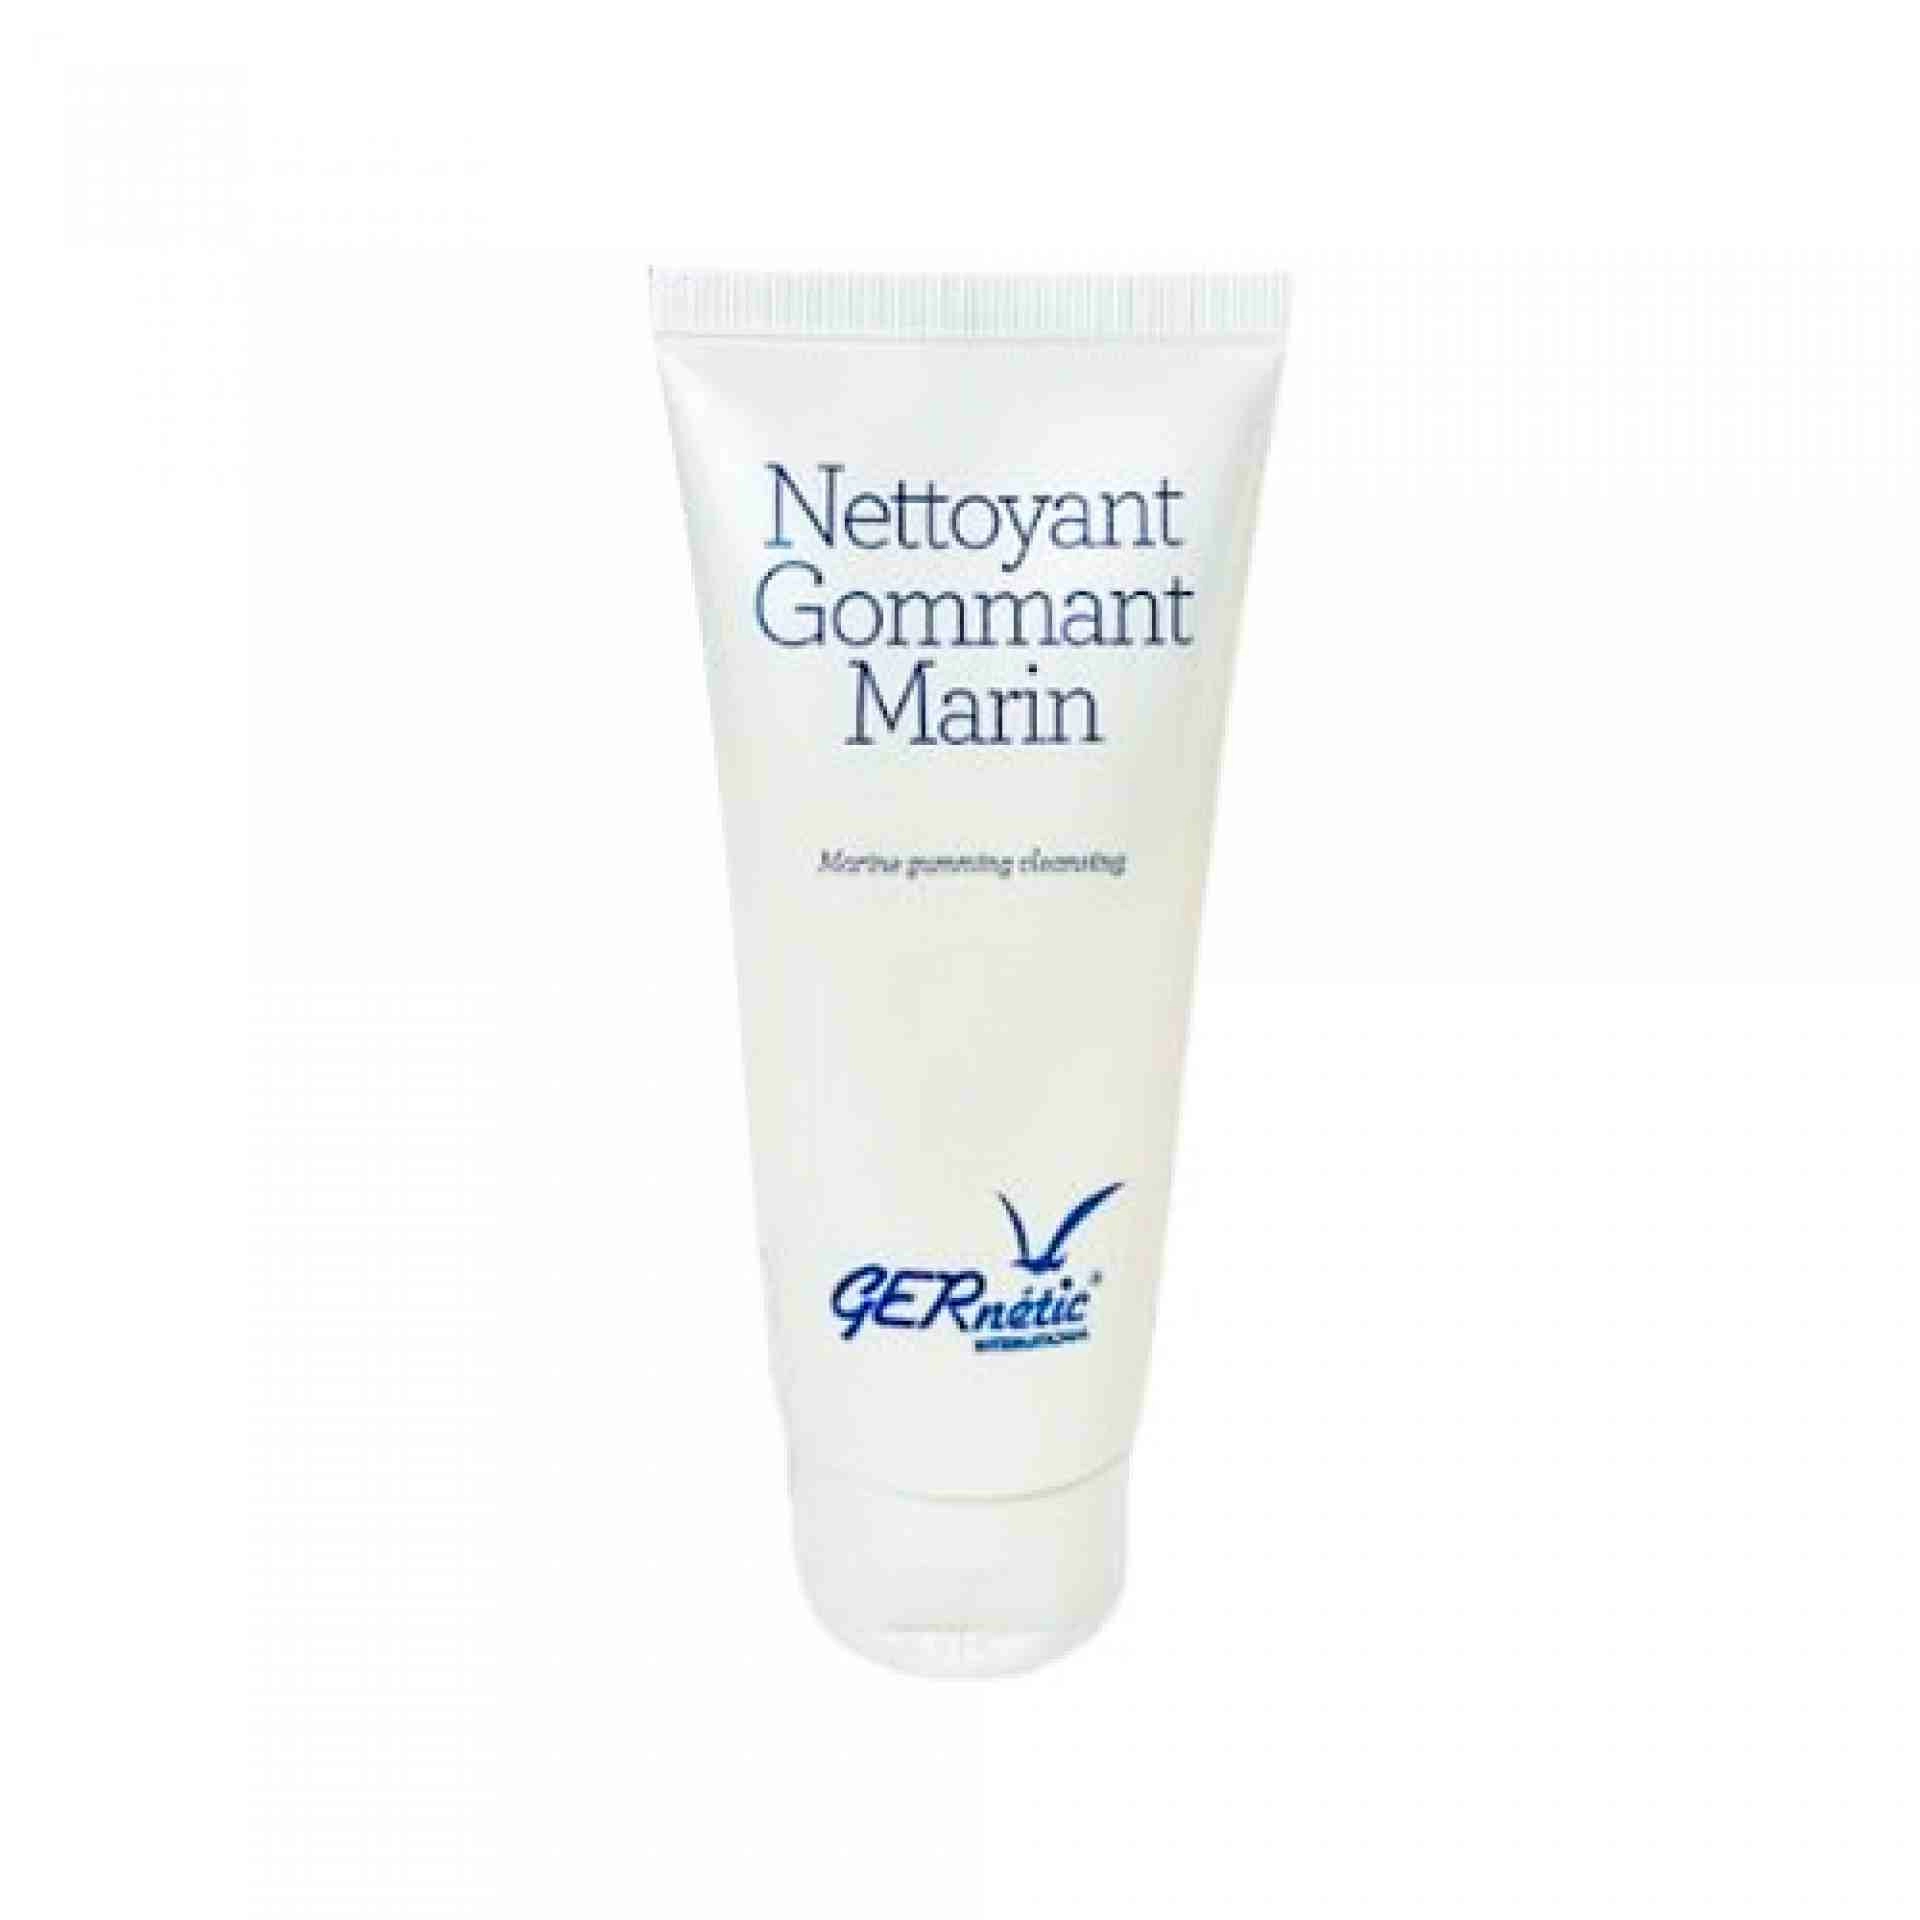 Nettoyant Gommant Marin | Gel facial - Marinos & Spa - Gernétic ®